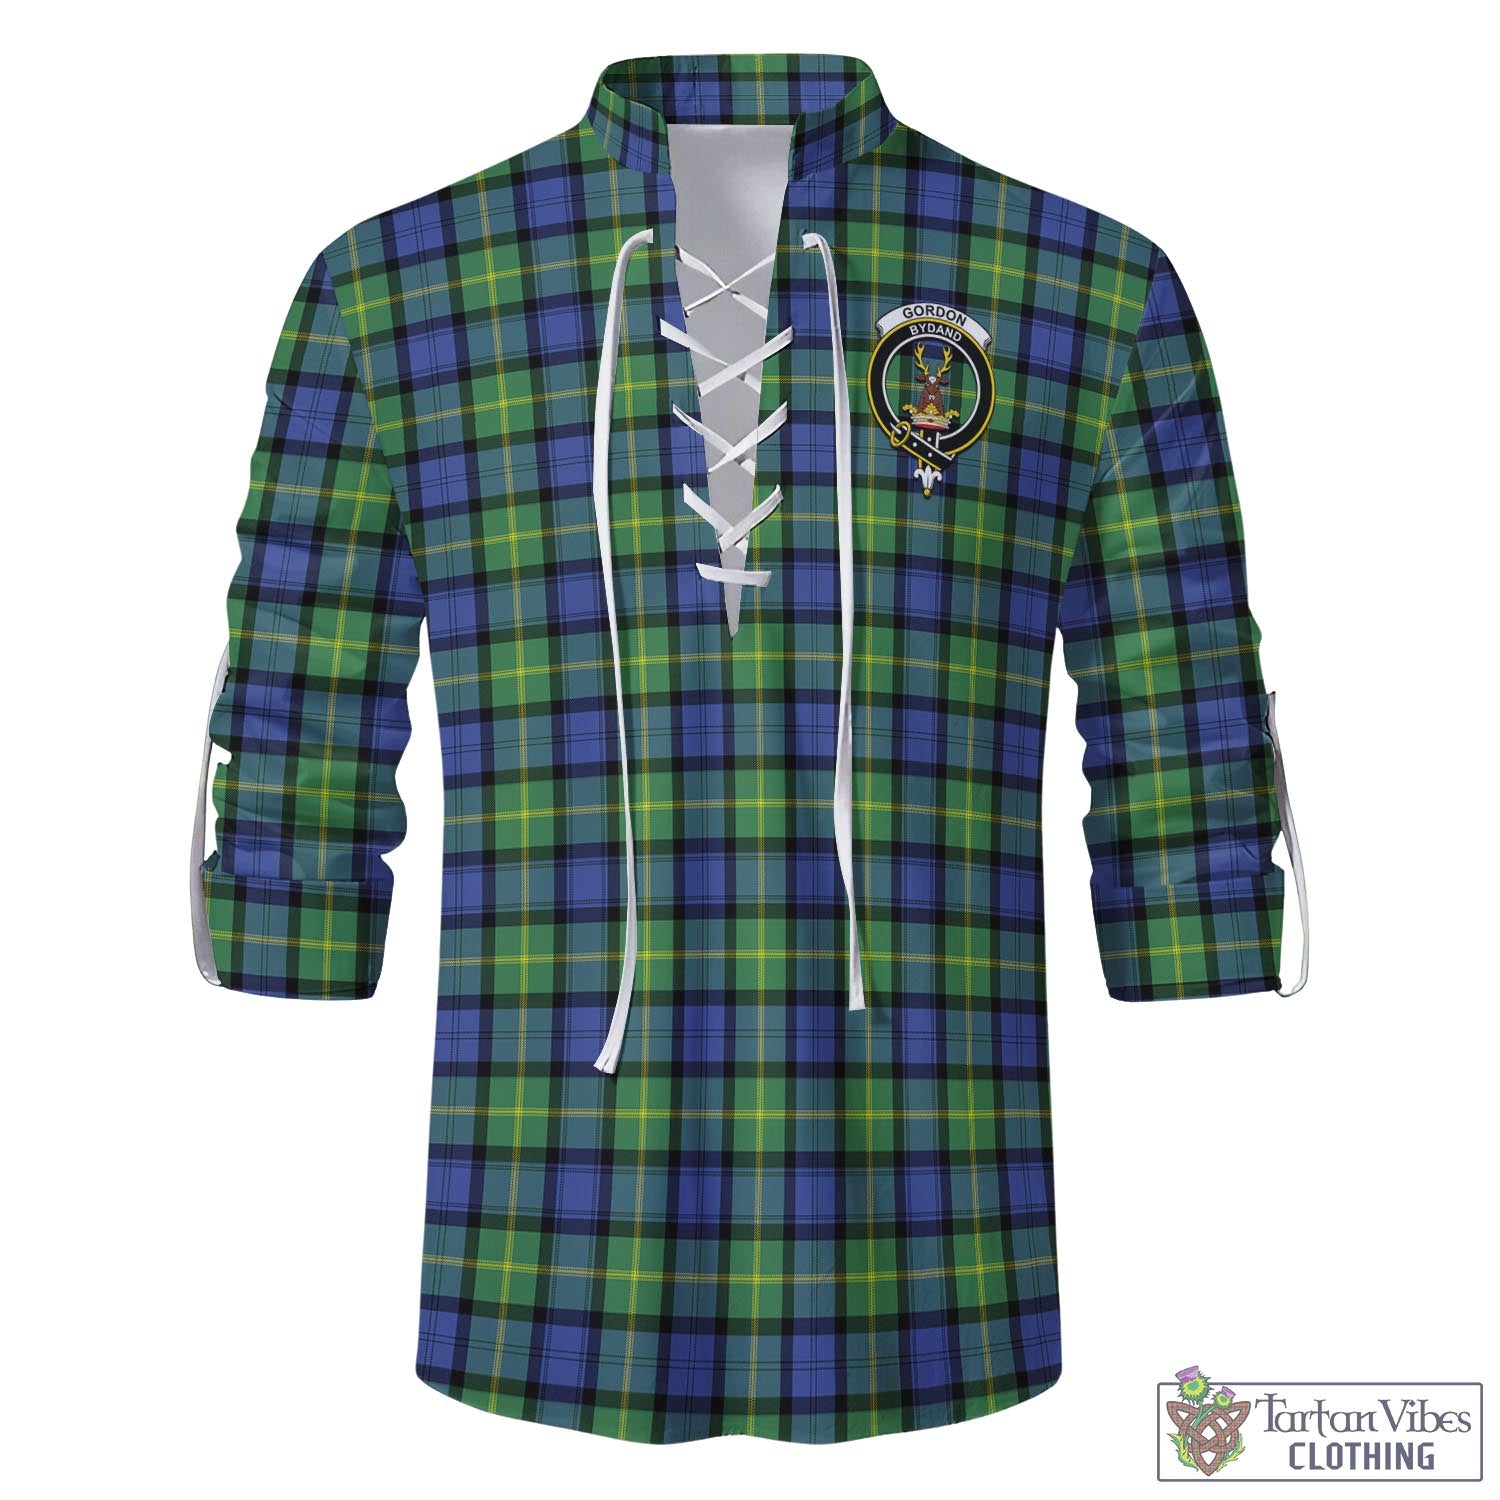 Tartan Vibes Clothing Gordon Old Ancient Tartan Men's Scottish Traditional Jacobite Ghillie Kilt Shirt with Family Crest